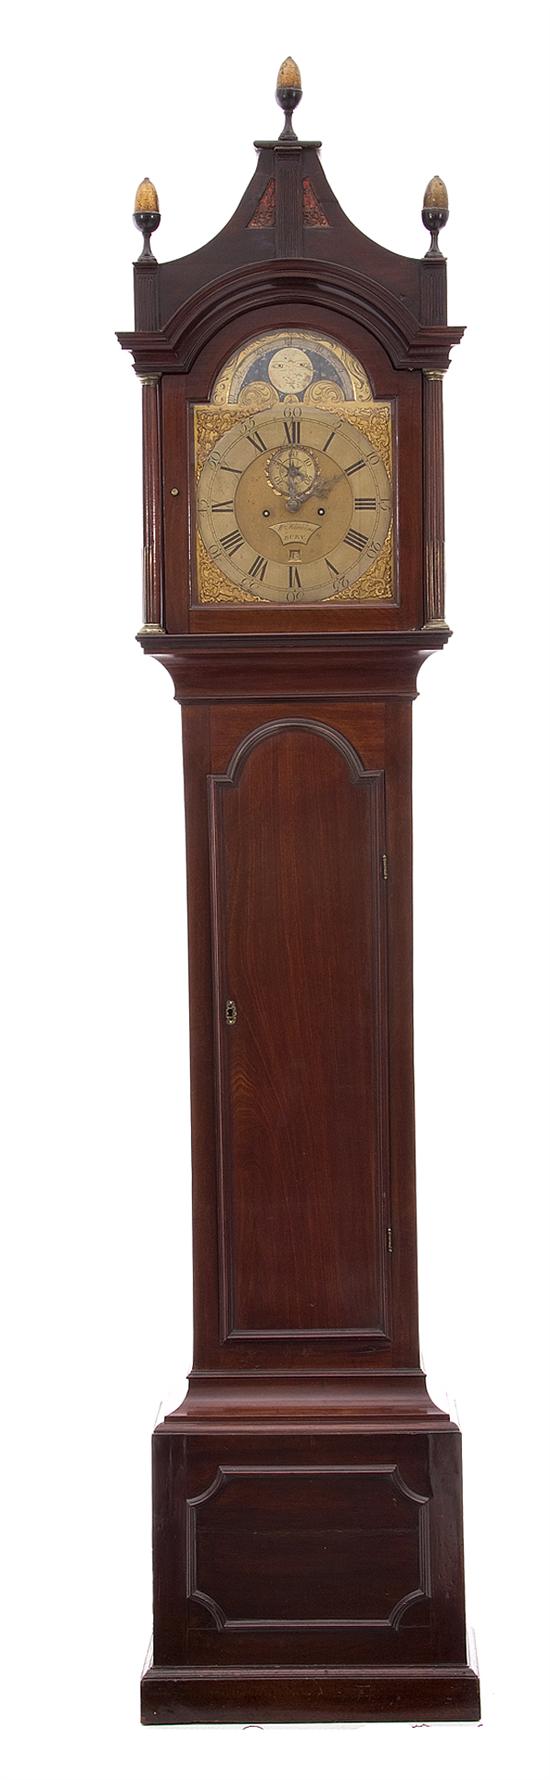 George III mahogany tall case clock